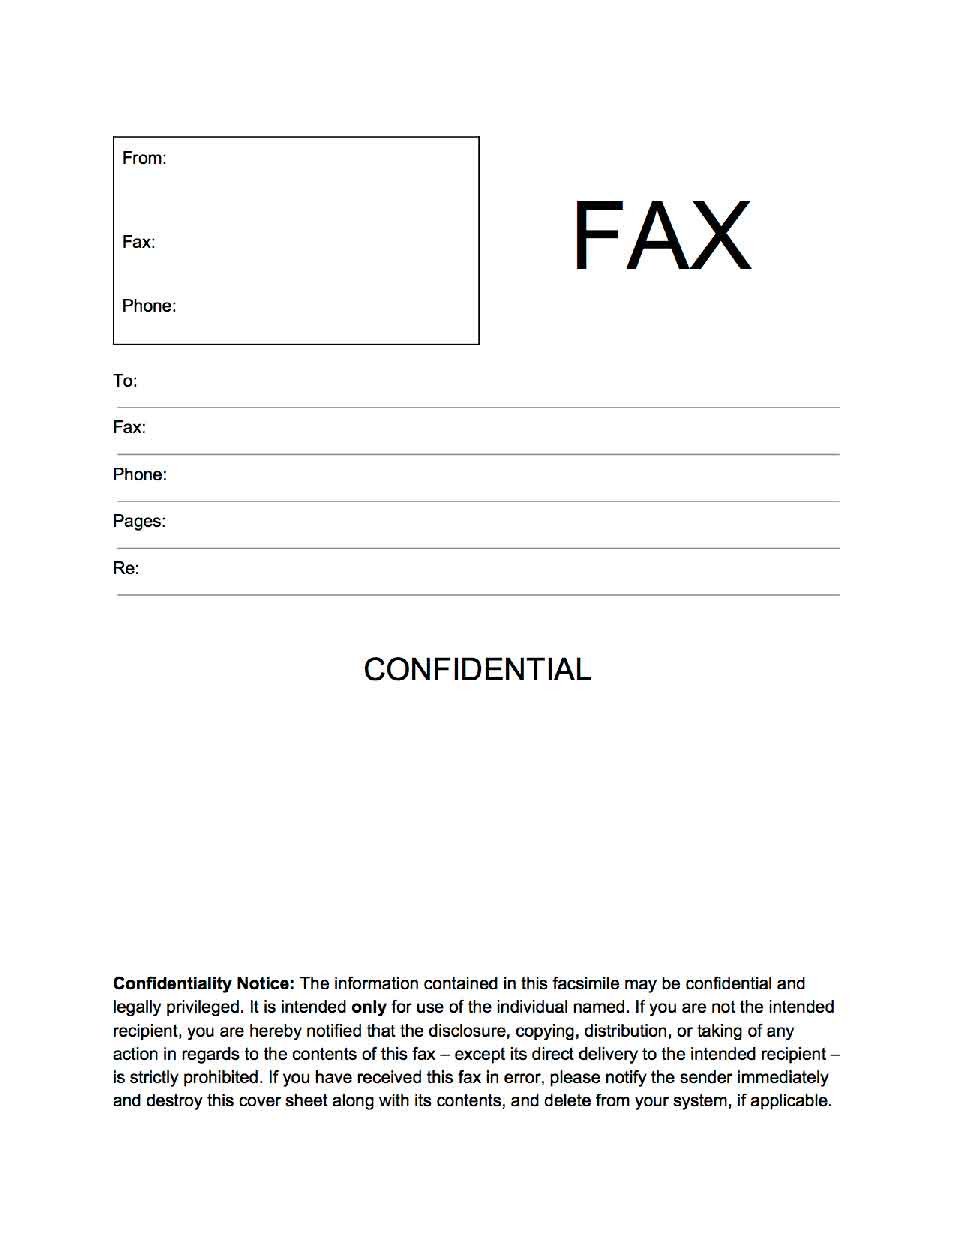 Fax Cover Sheet Confidential